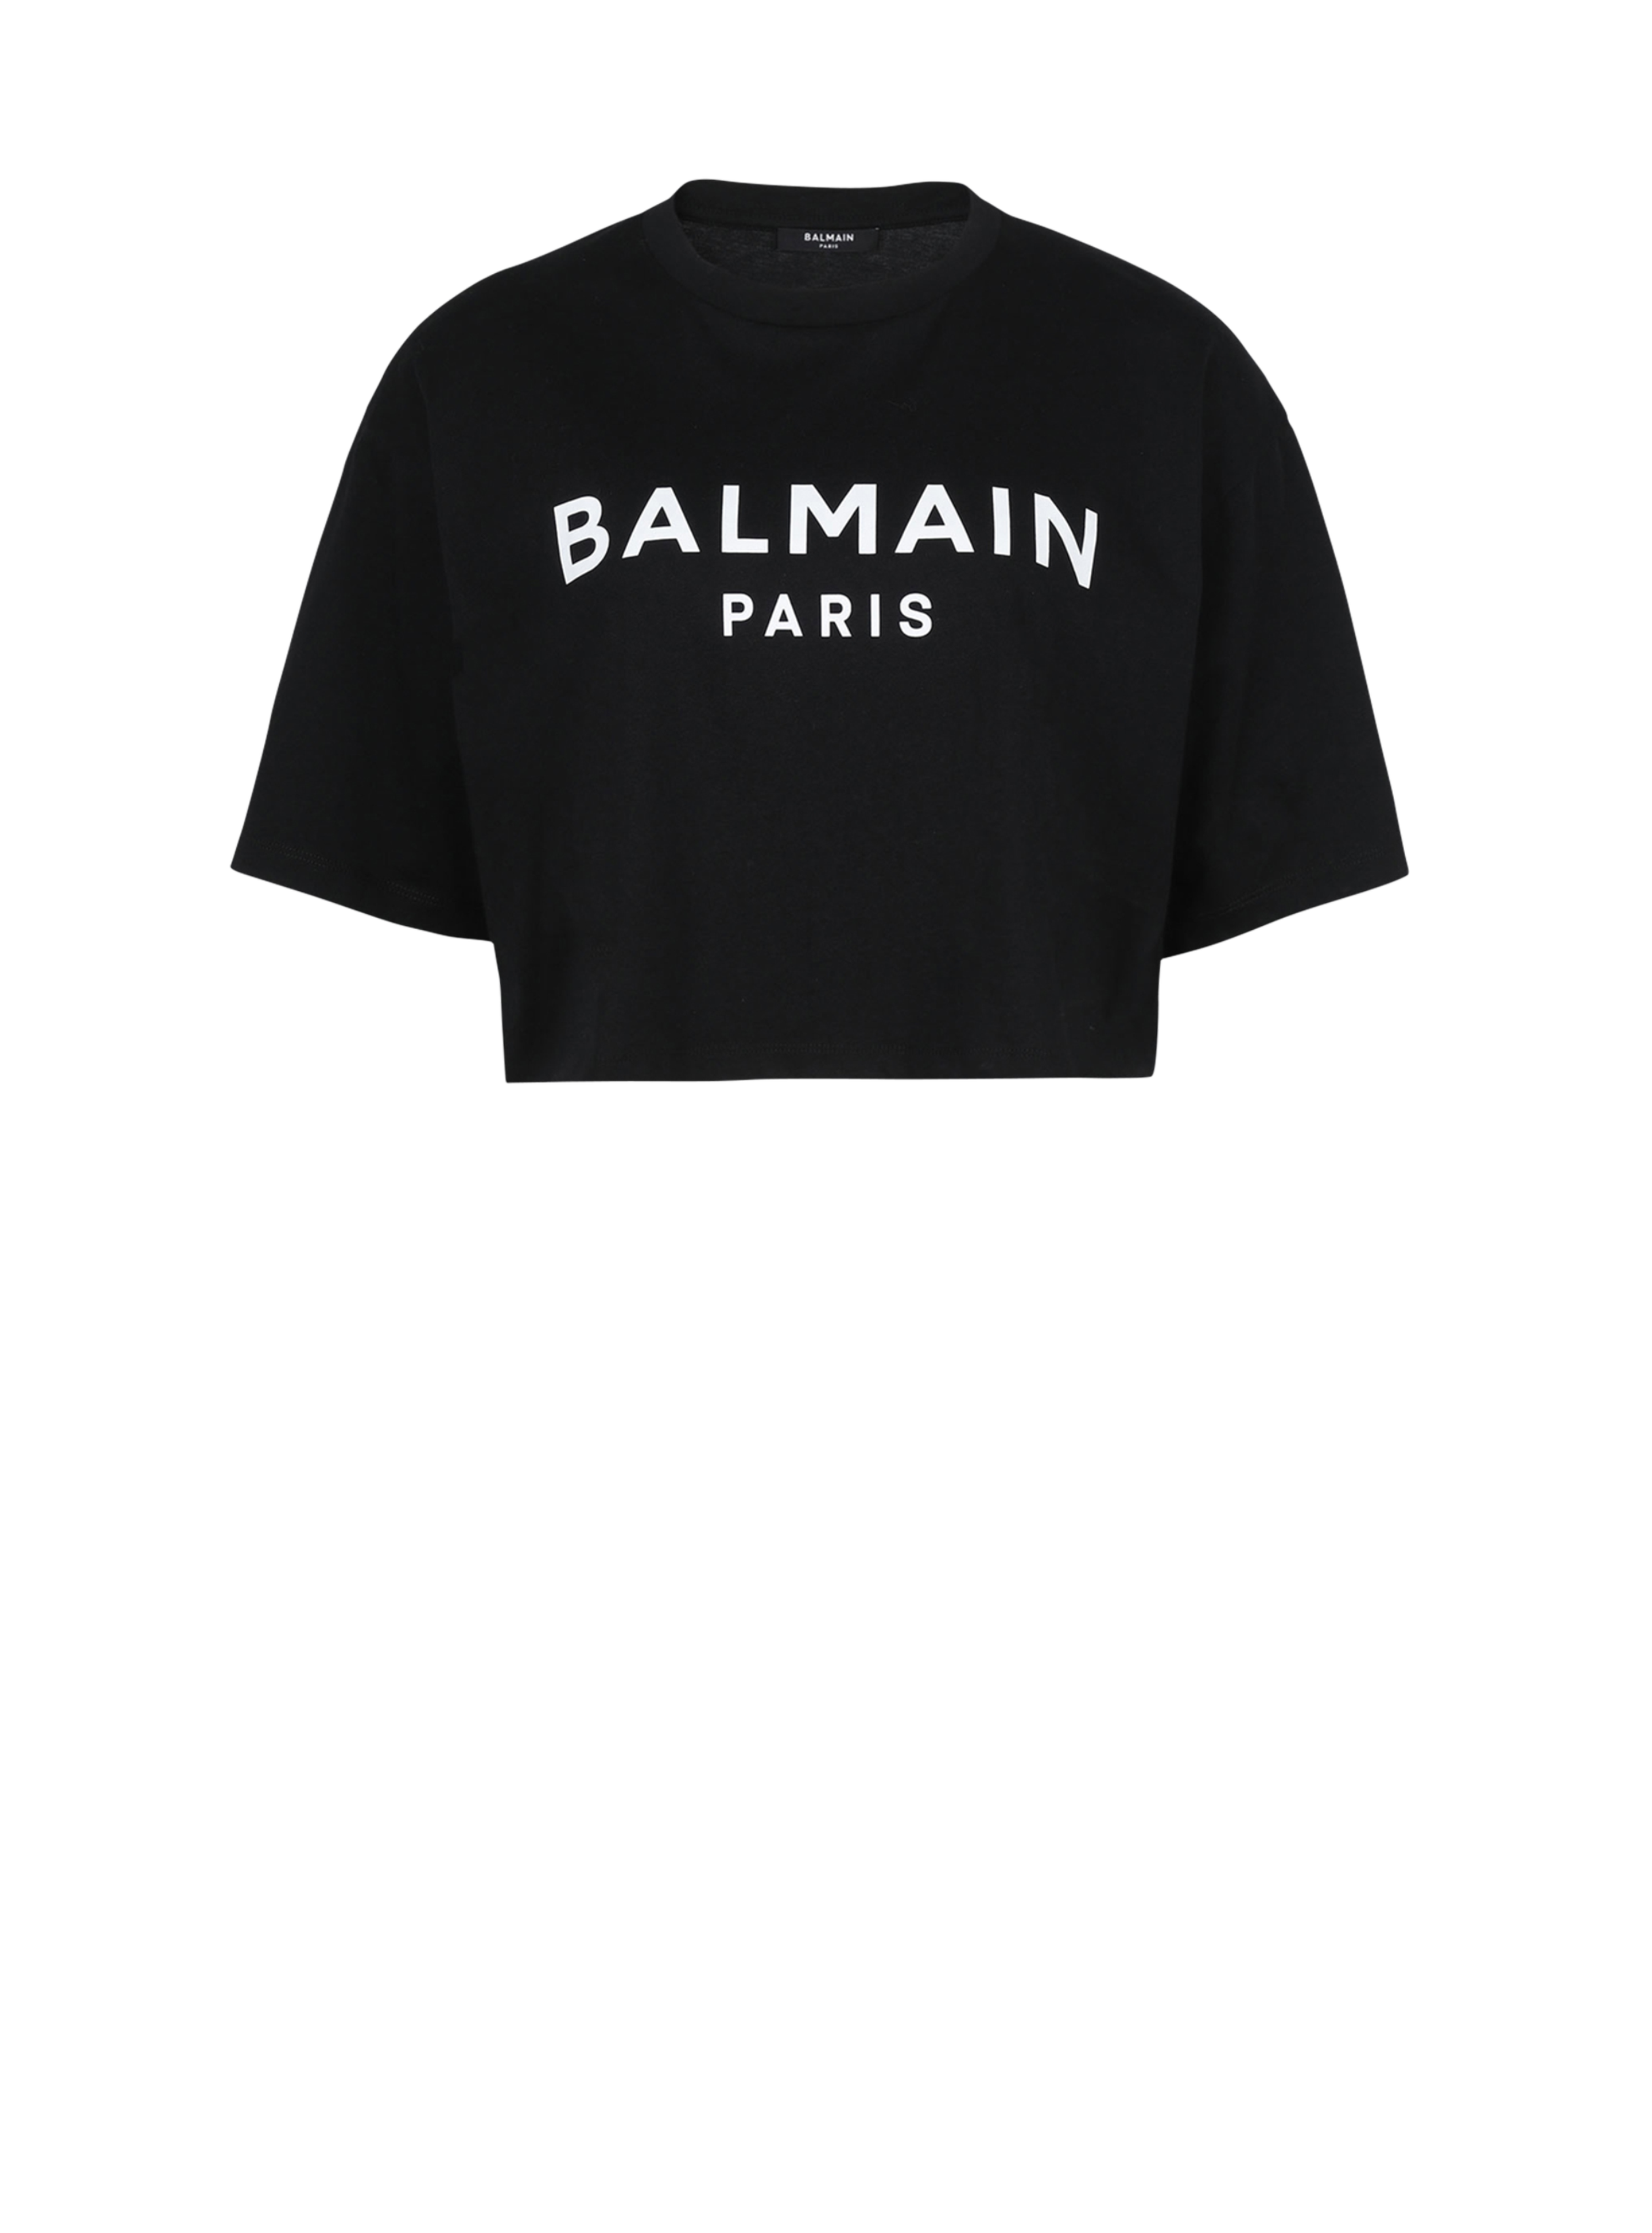 Balmain巴尔曼标志印花环保设计棉质T恤, black